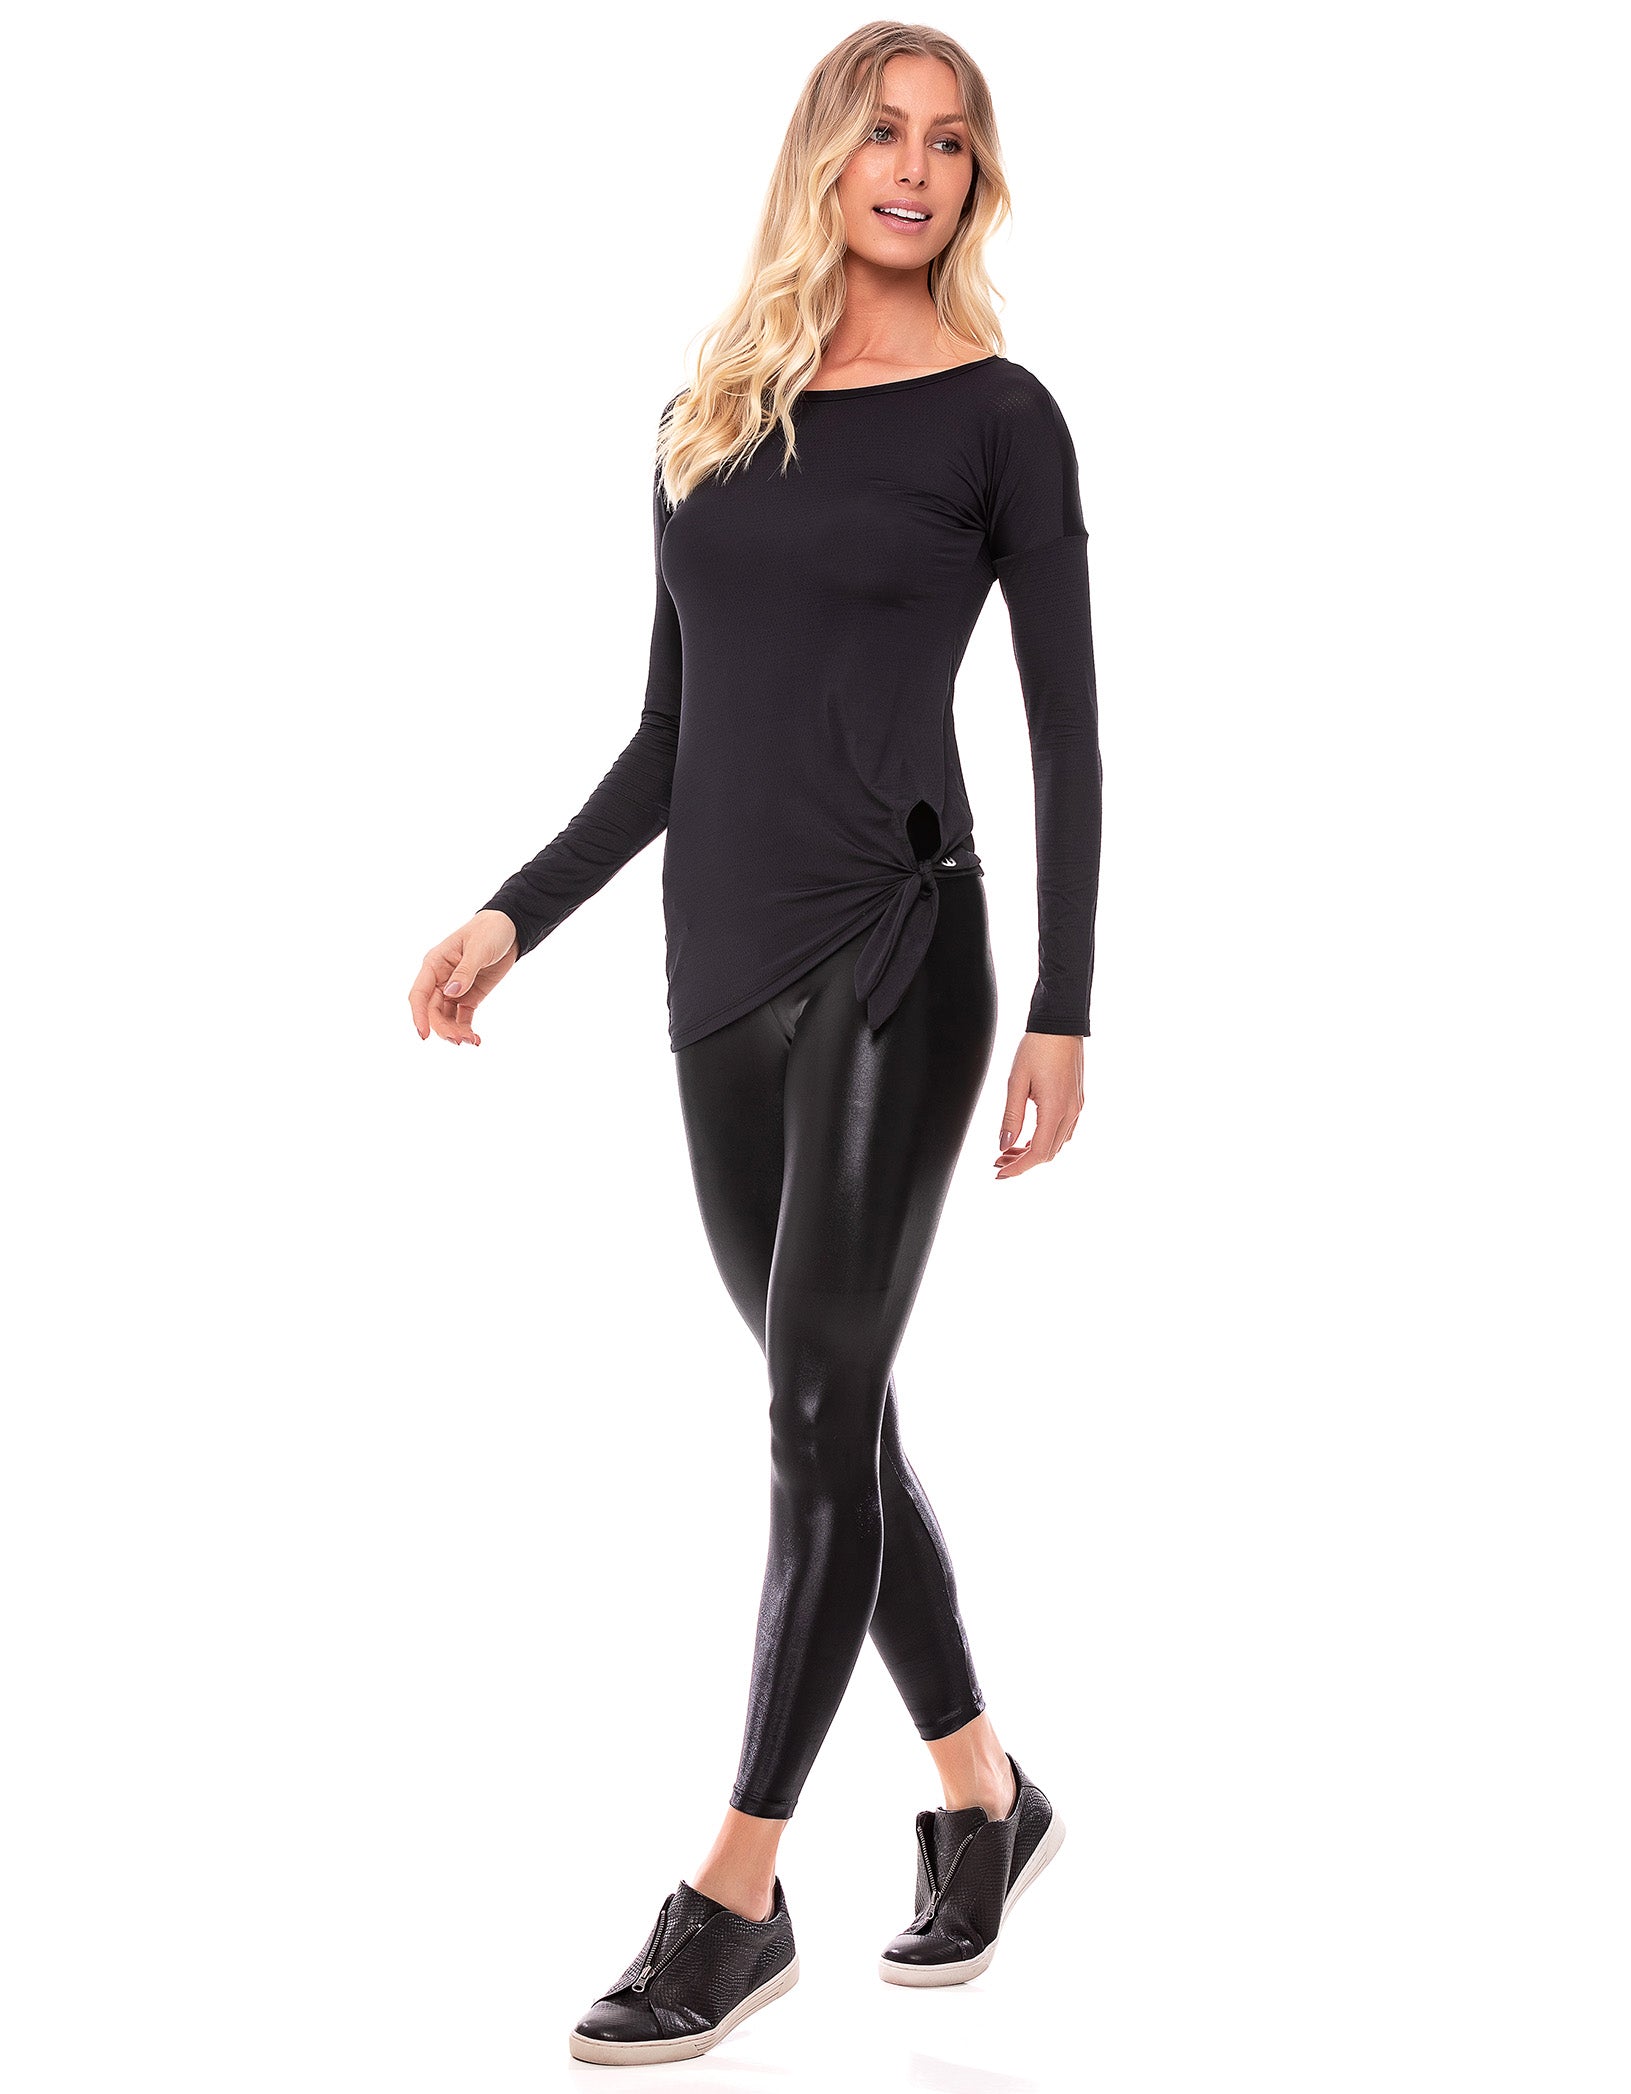 Vestem - Shirt Dry Fit Long Sleeve Jenny Black - BML289C0002